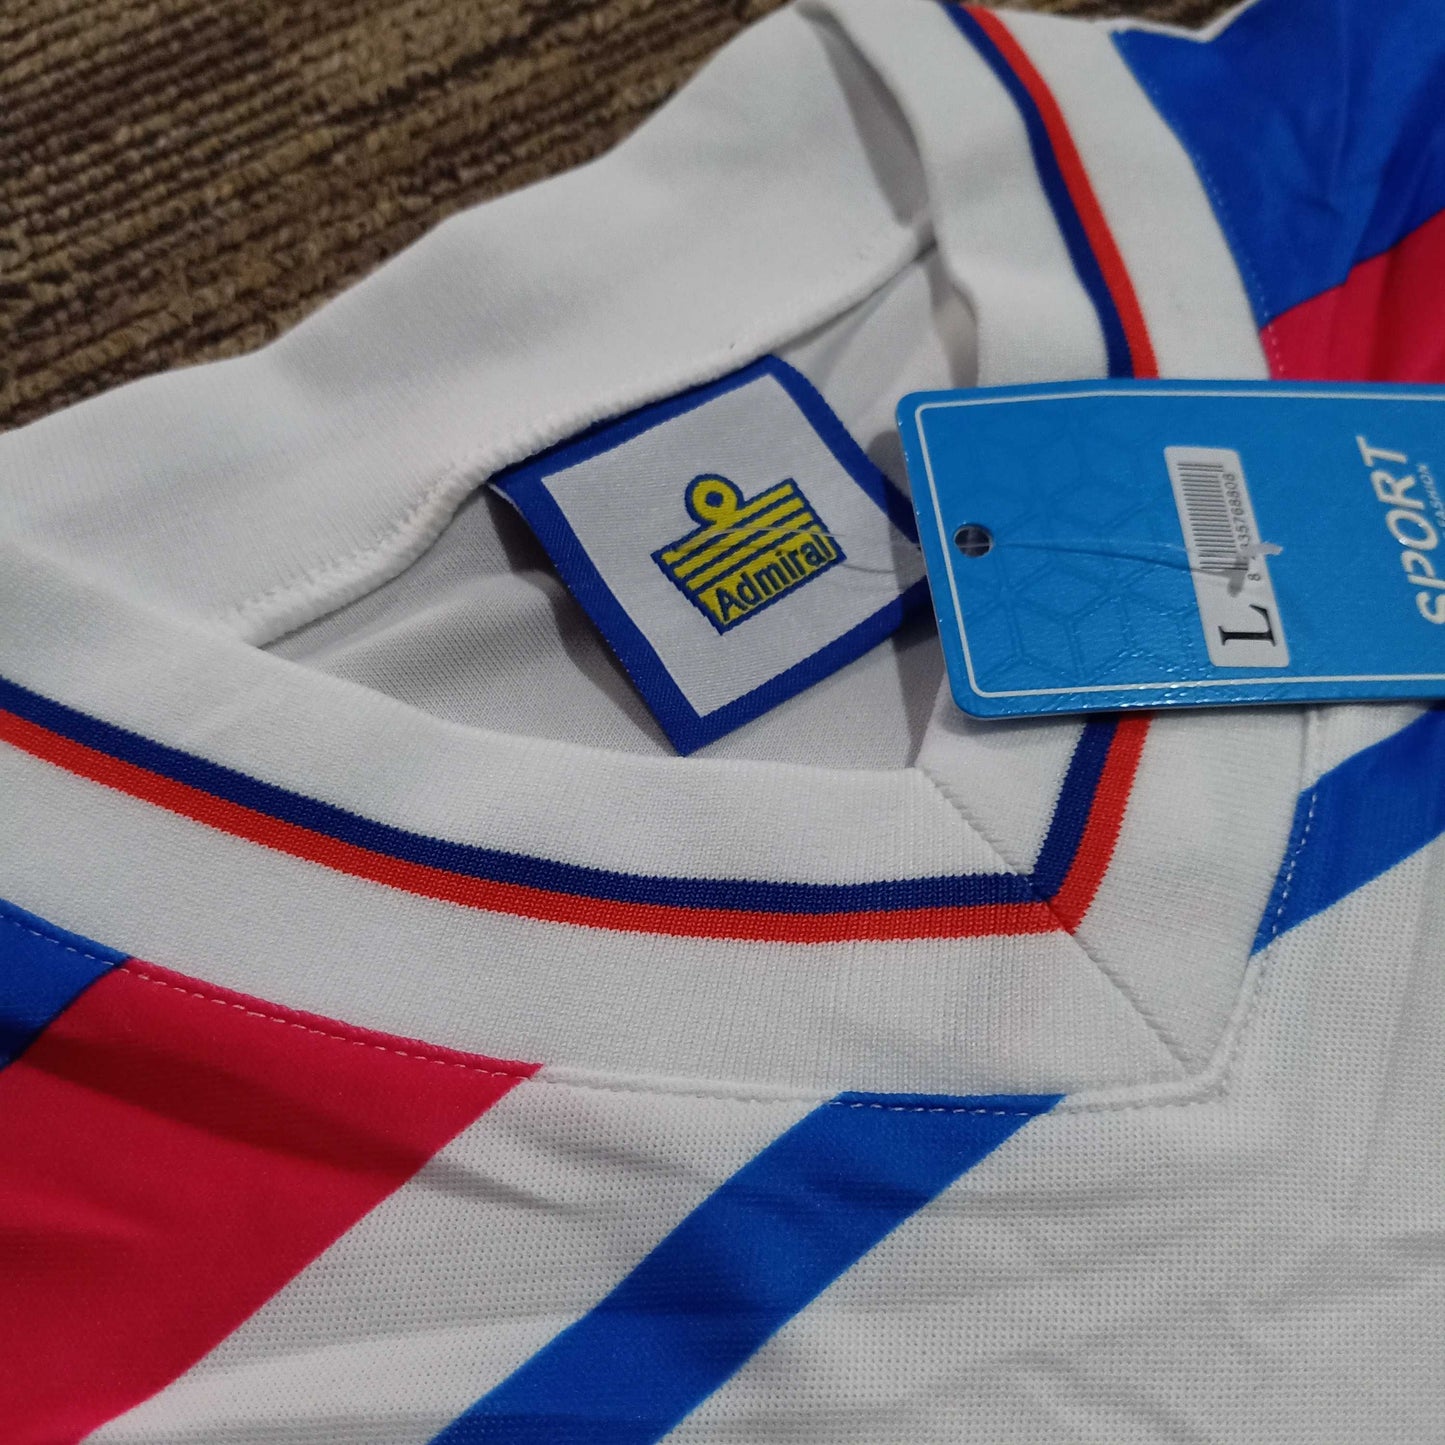 1980 England Home Shirt - ClassicFootballJersey